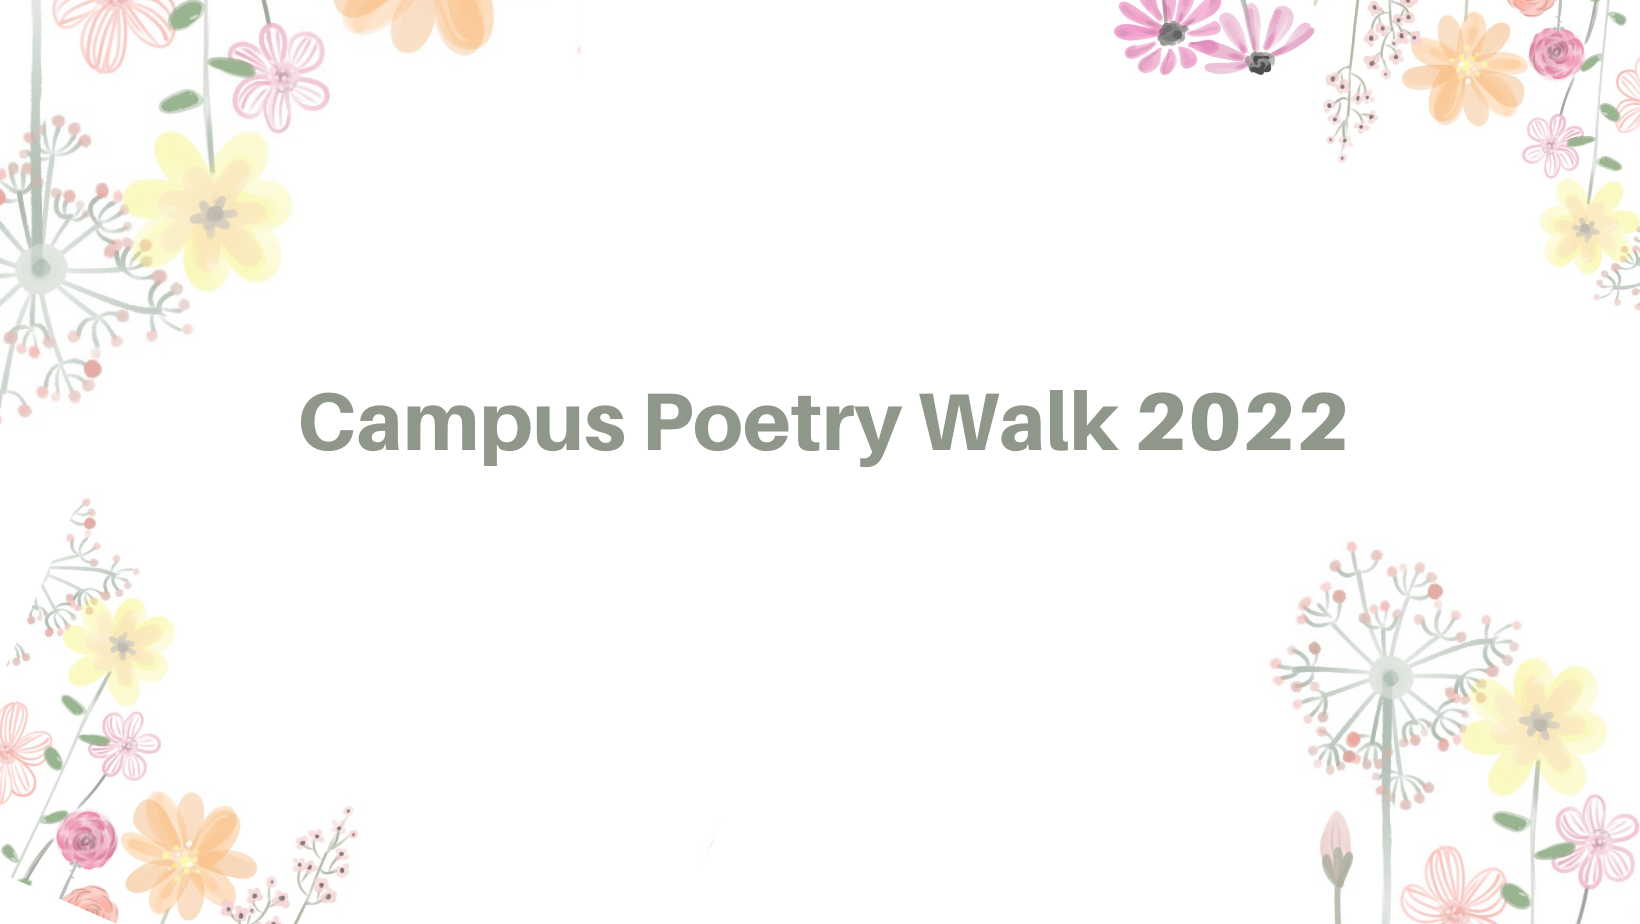 Campus Poetry Walk 2022